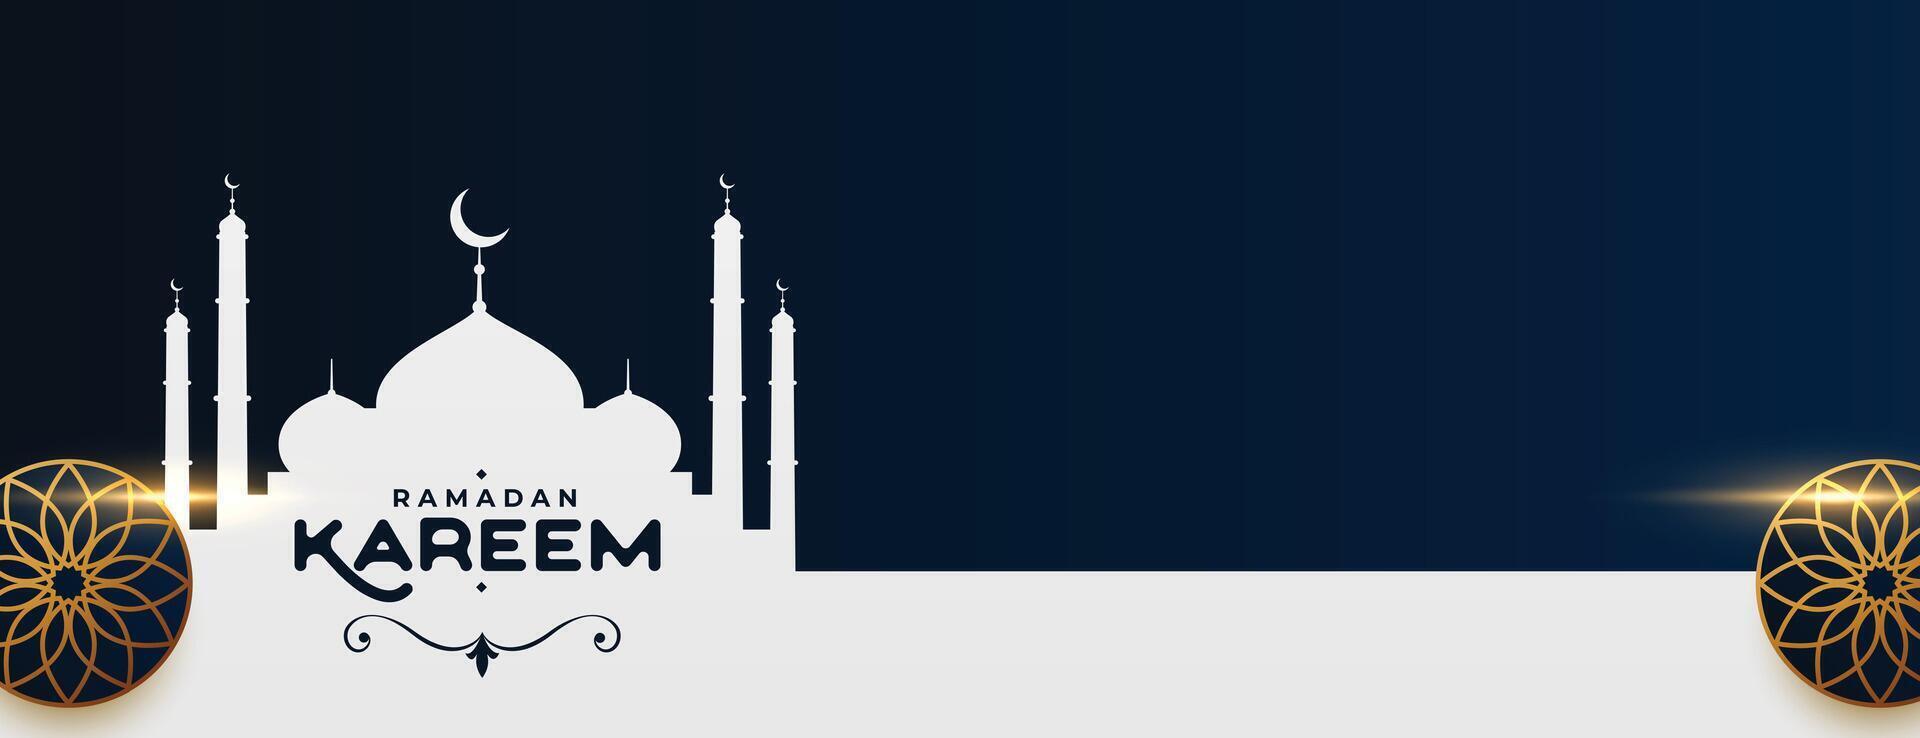 Ramadan kareem ramzaan eid Festival islamique bannière avec texte espace vecteur